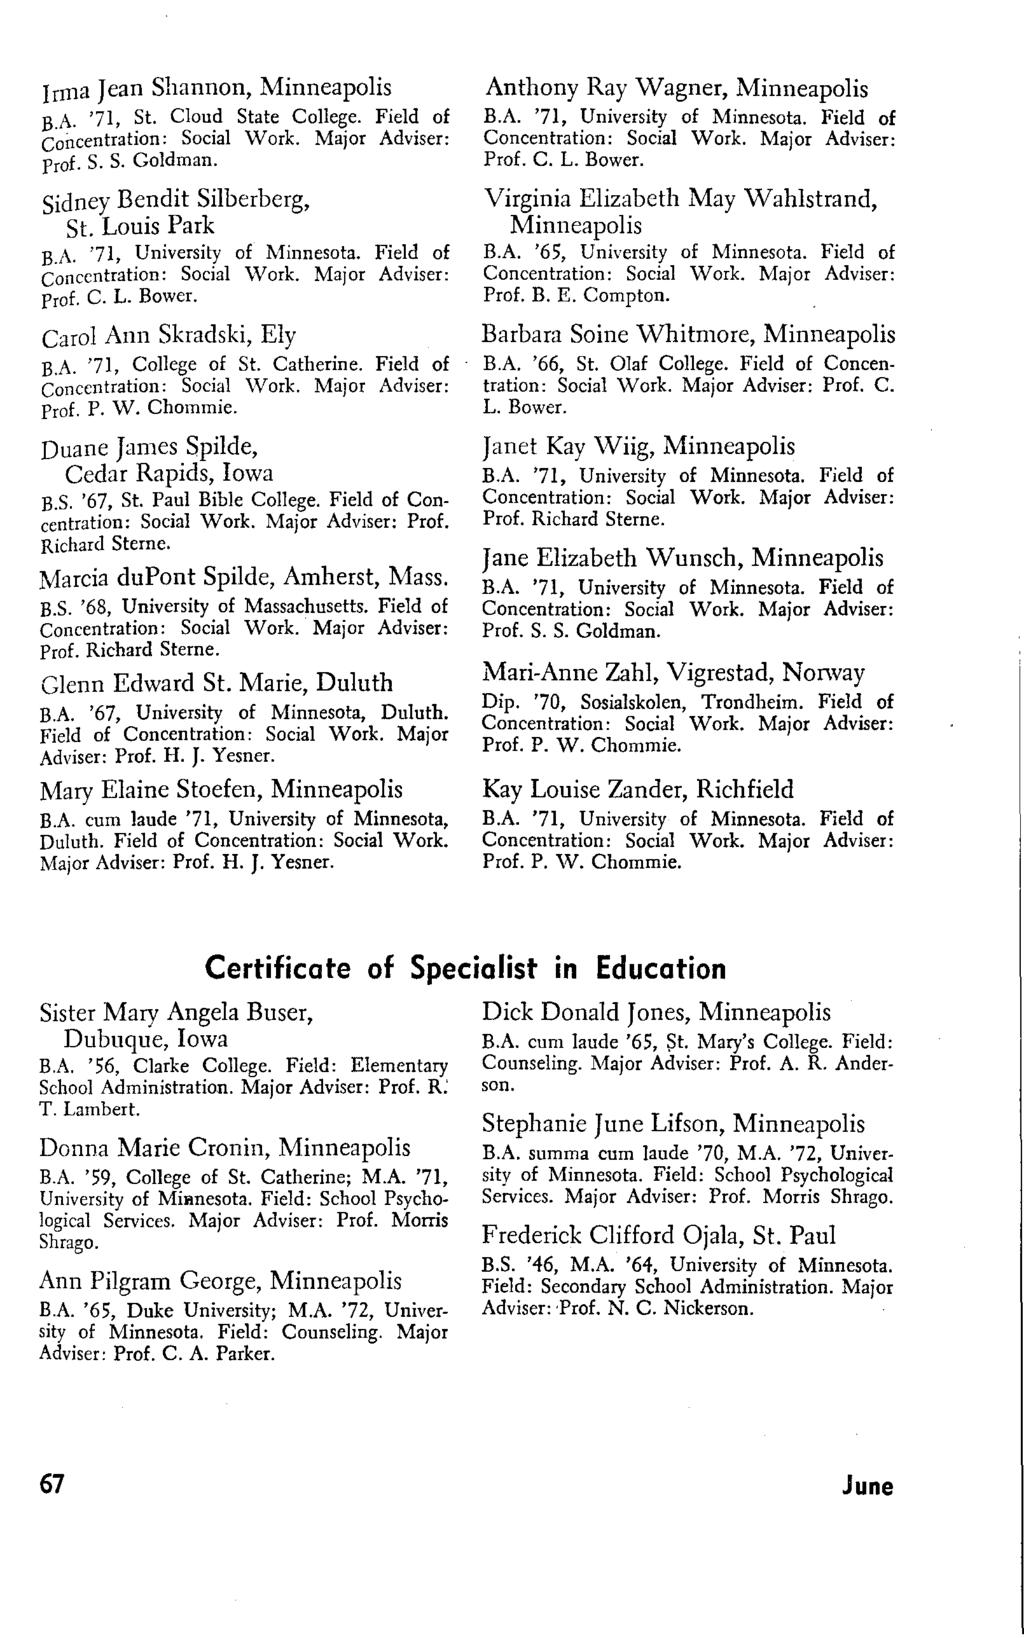 Irma Jean Shannon, B.A. '71,?t. Clou? State Colle~e. Fiel~ of Concentrahon: SOCIal Work. Major AdvIser: Prof. S. S. Goldman. Sidney Bendit Silberberg, St. Louis Park B.A. '71, University of Mmnesota.